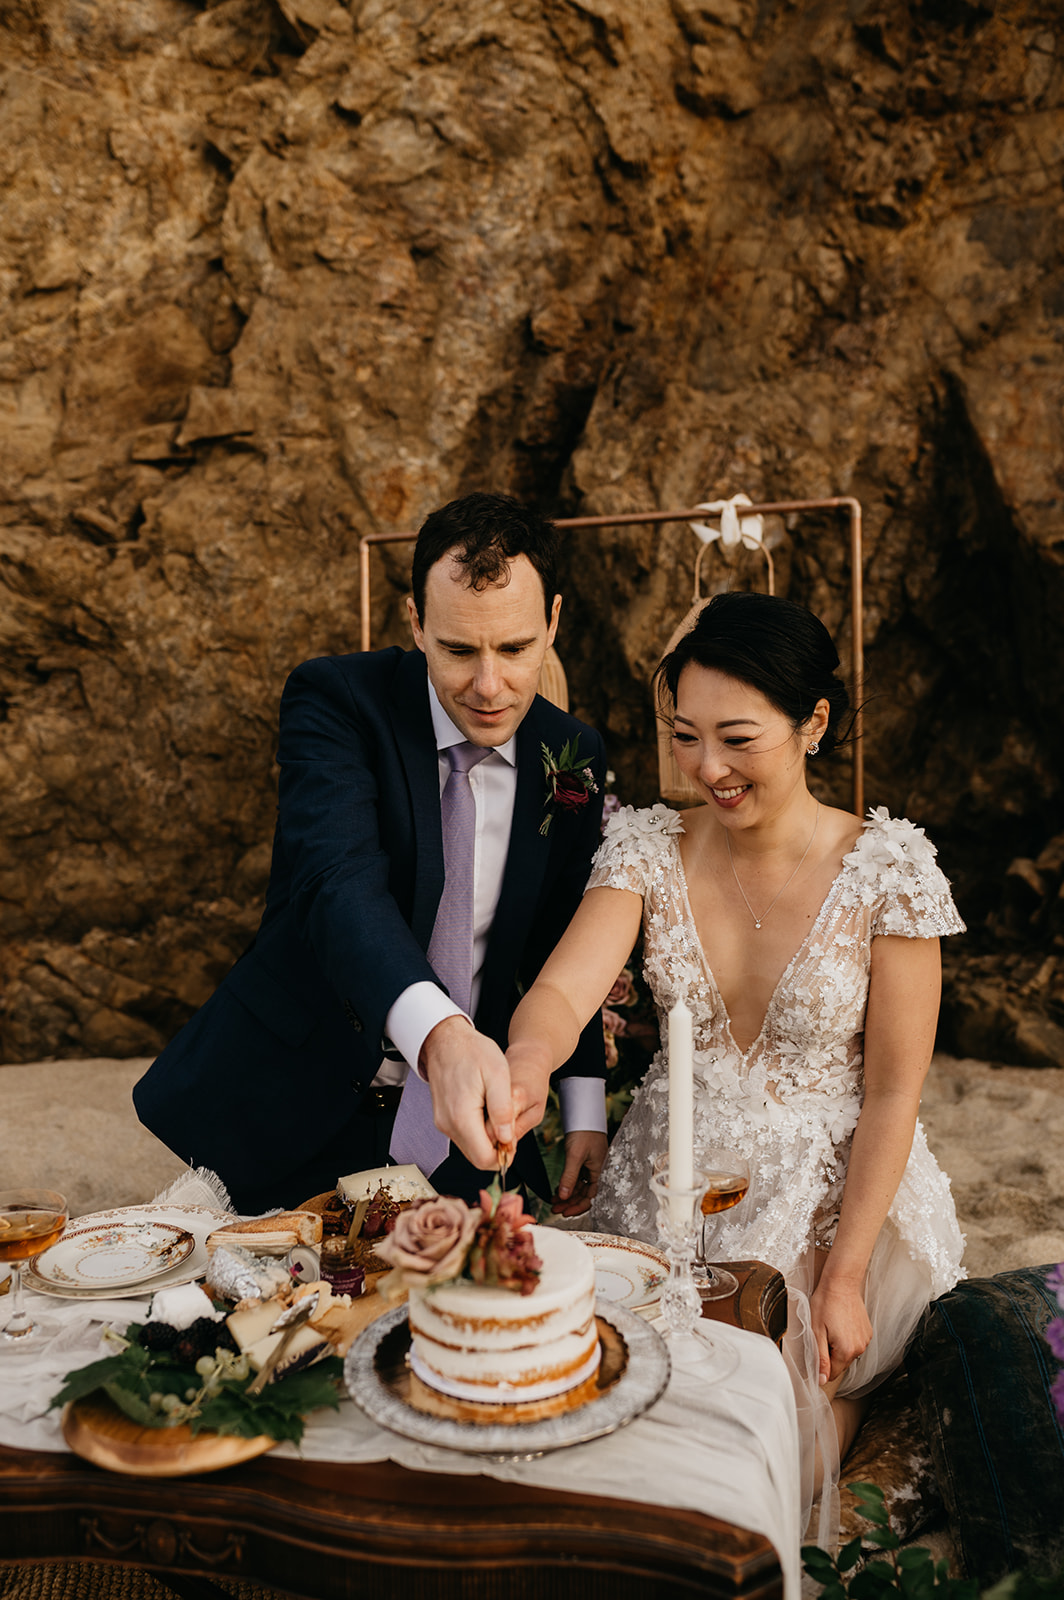 Bride and groom cutting their wedding cake on the beach during their beach picnic in Big Sur California.